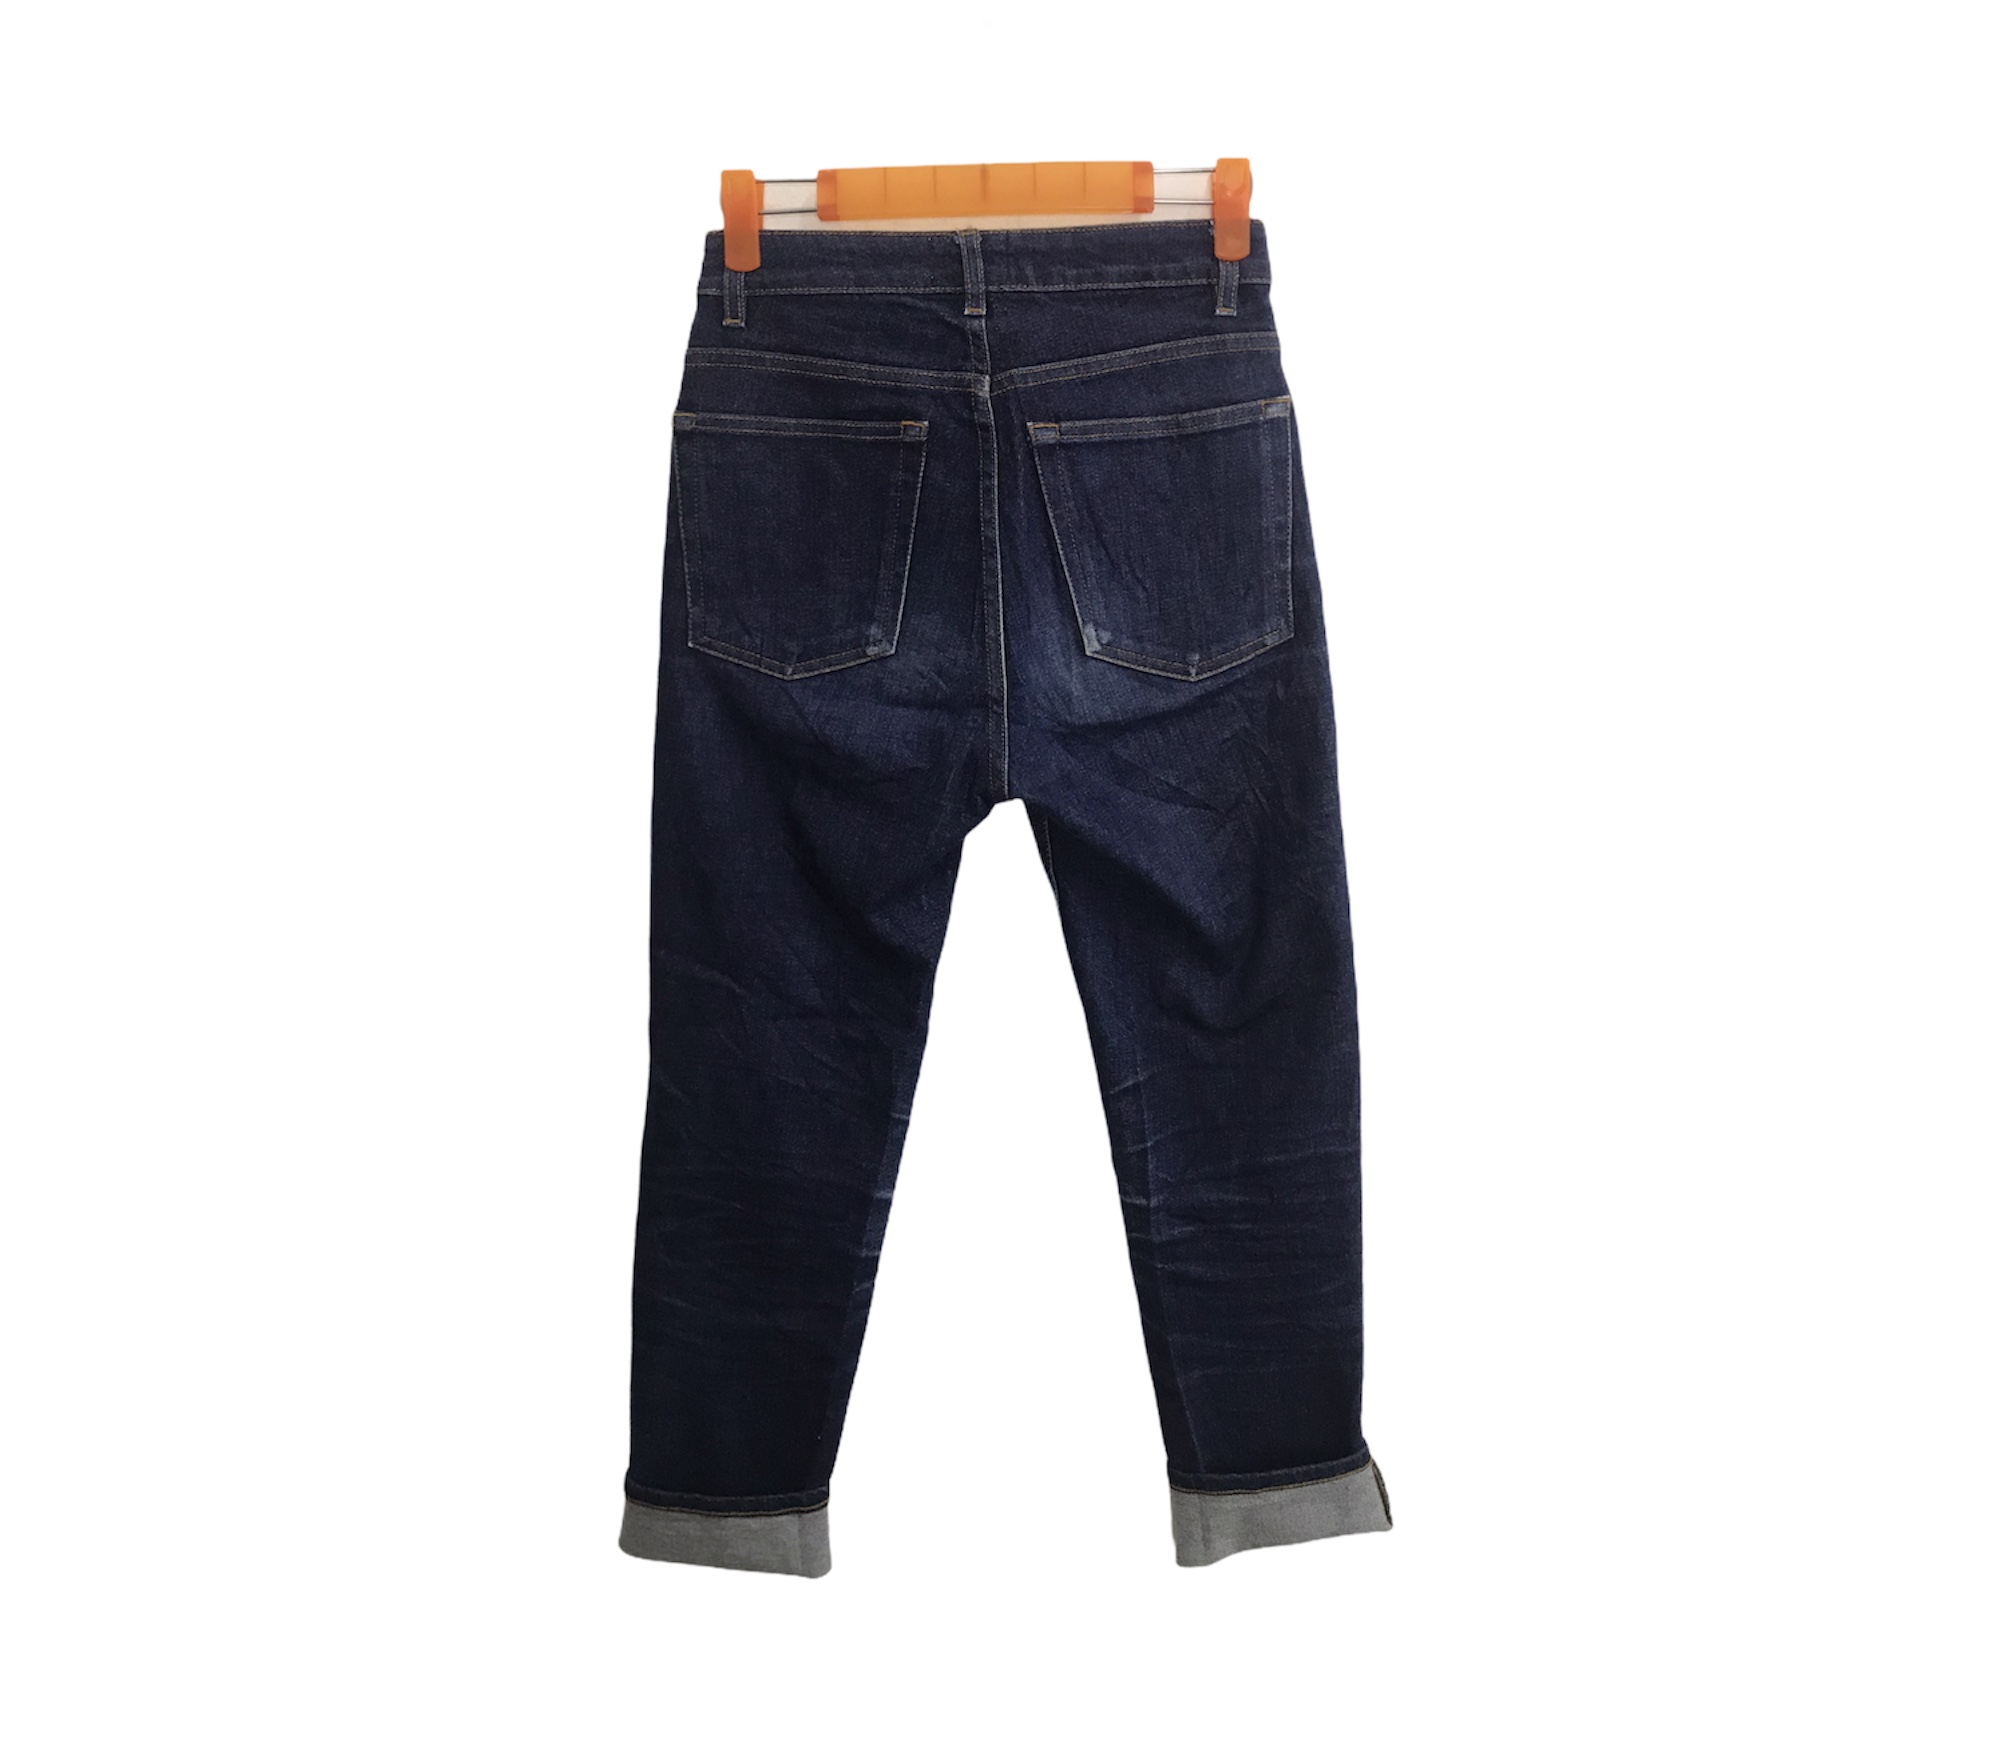 Acne Studios Italian Designer Denim Jeans Trouser Pant - 2